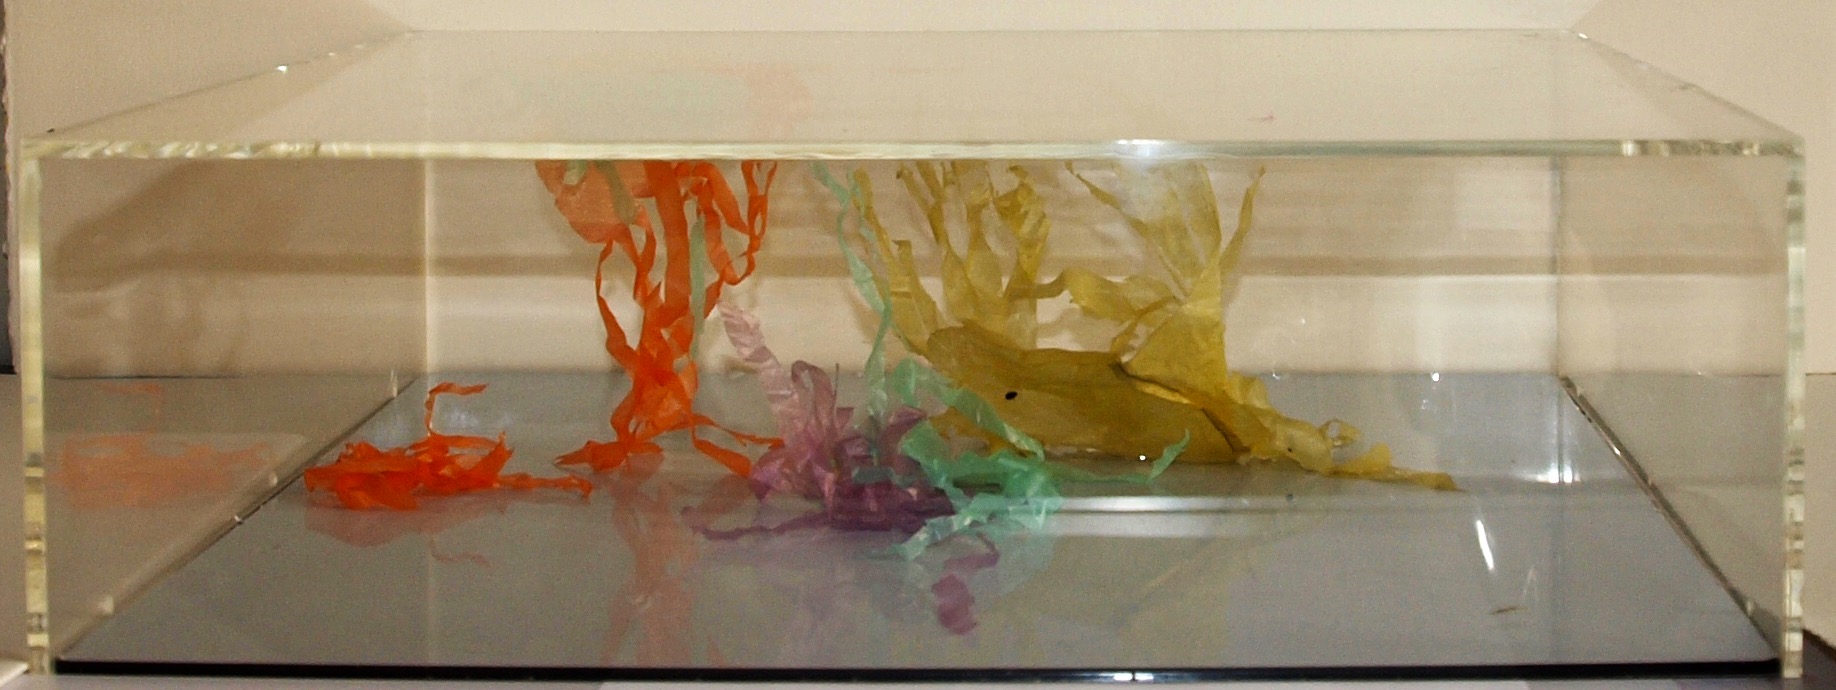 L'aquarium des méduses 80/60  2009